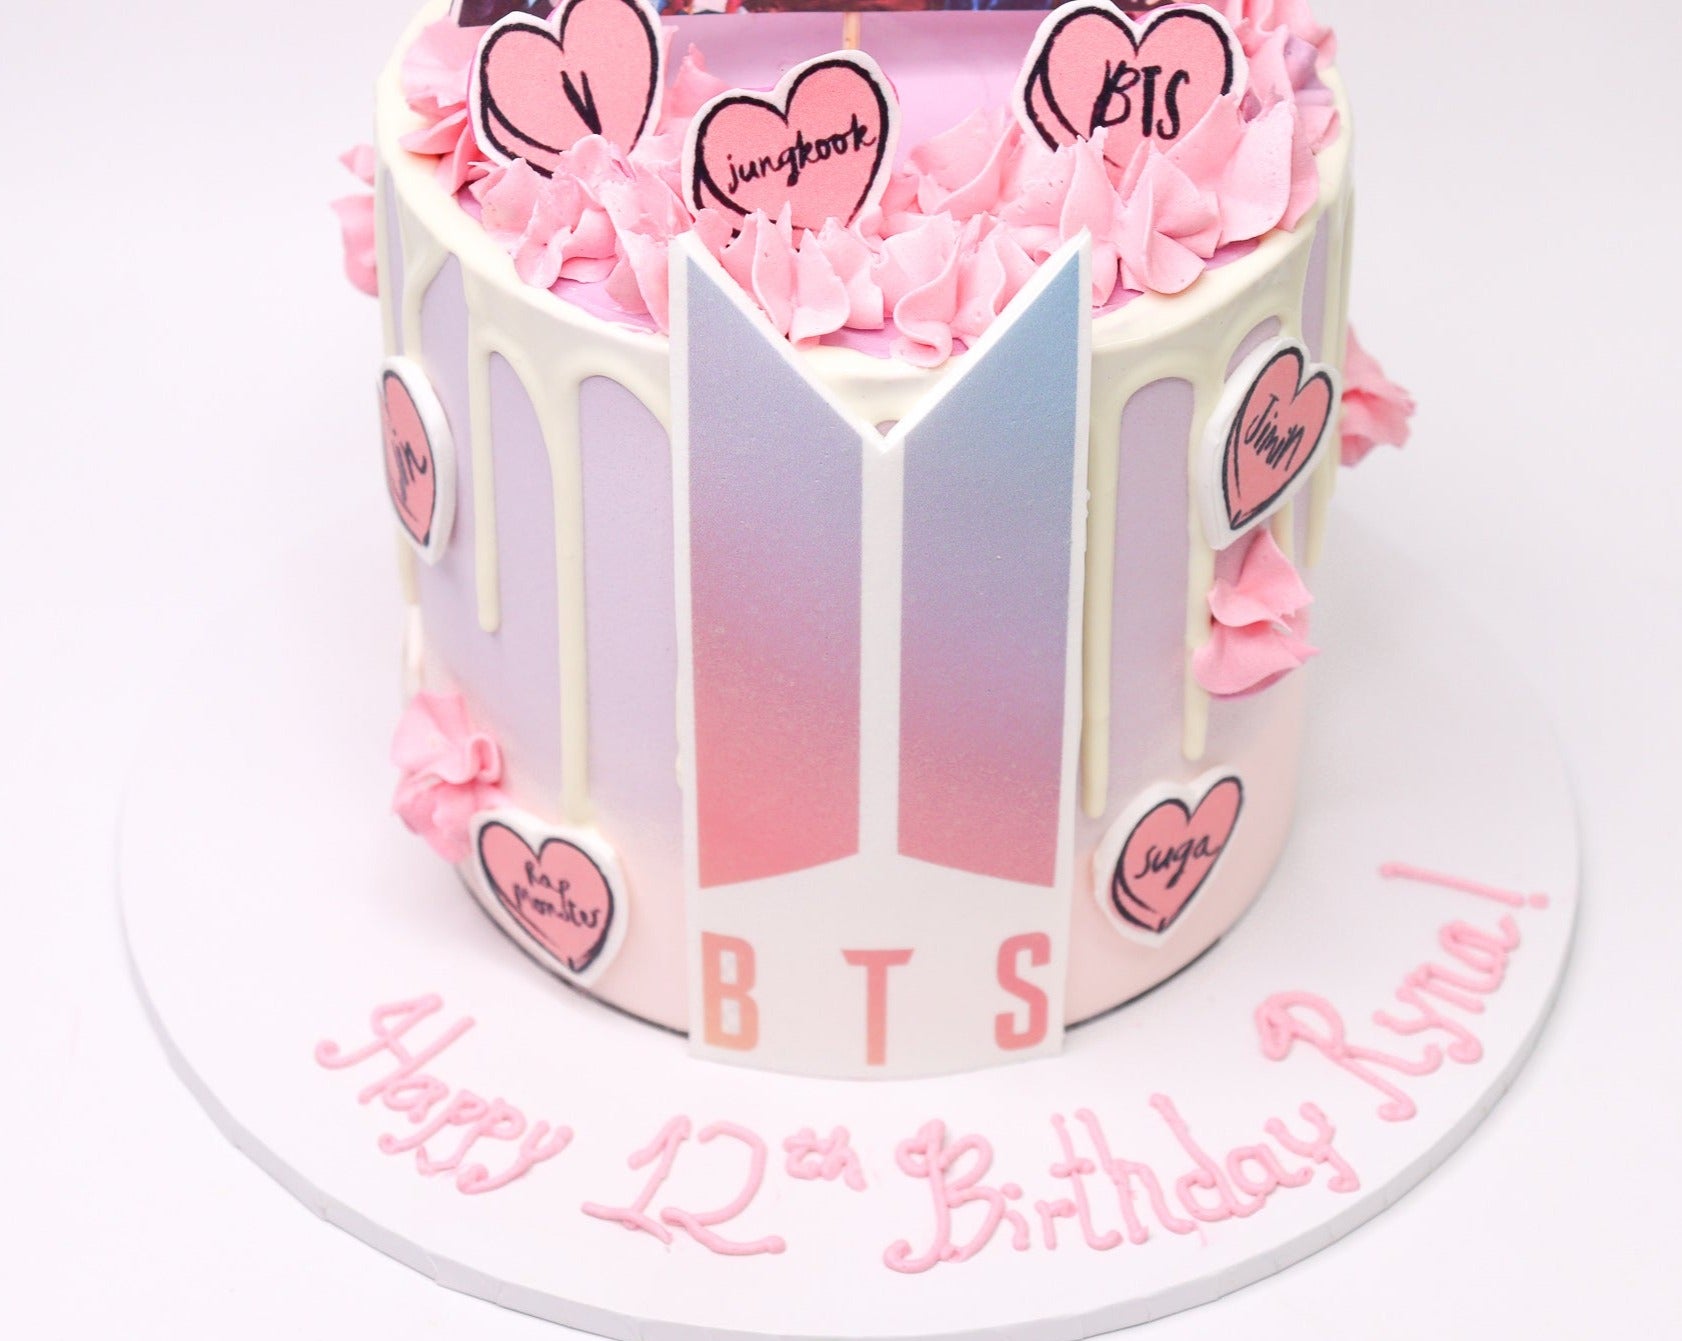 BEST 100+ BTS Cake || BTS Cake Design || BTS Cake Ideas || BTS Cake Images  - Mixing Images